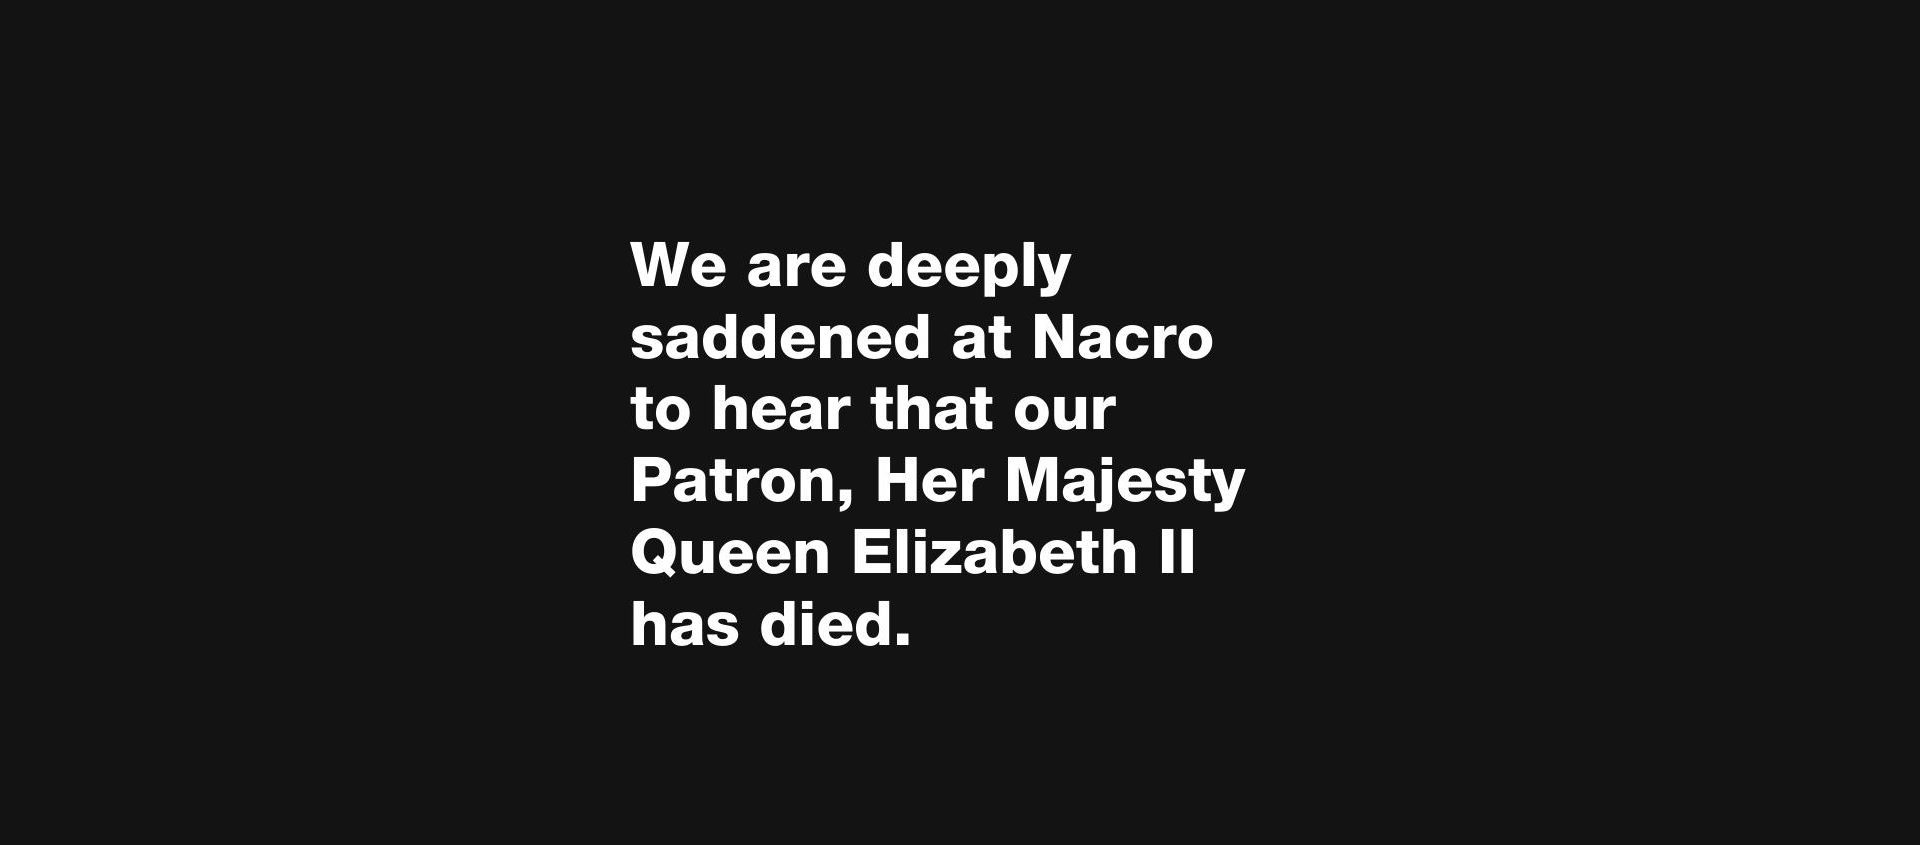 nacro message regarding her majesty queen elizabeth the second's death